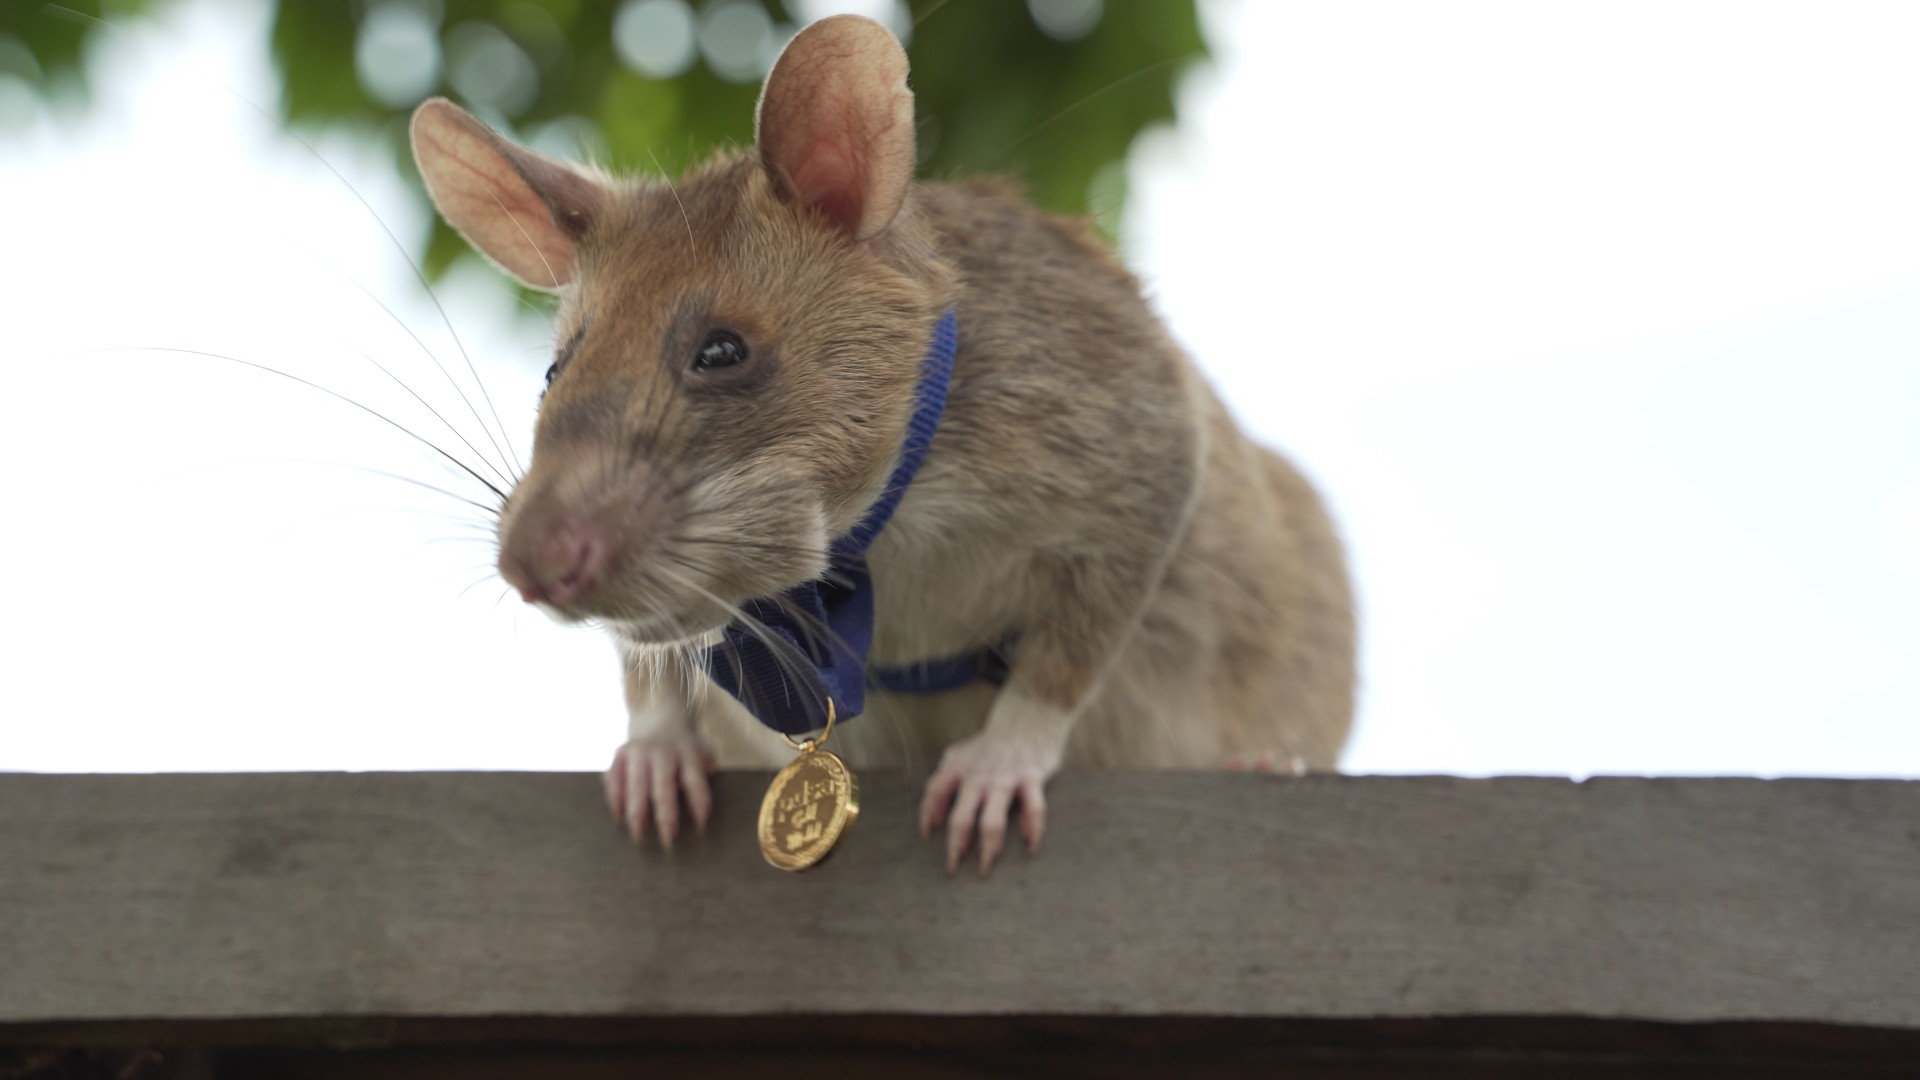 Morre Magawa, rata farejadora de minas terrestres premiada por bravura animal